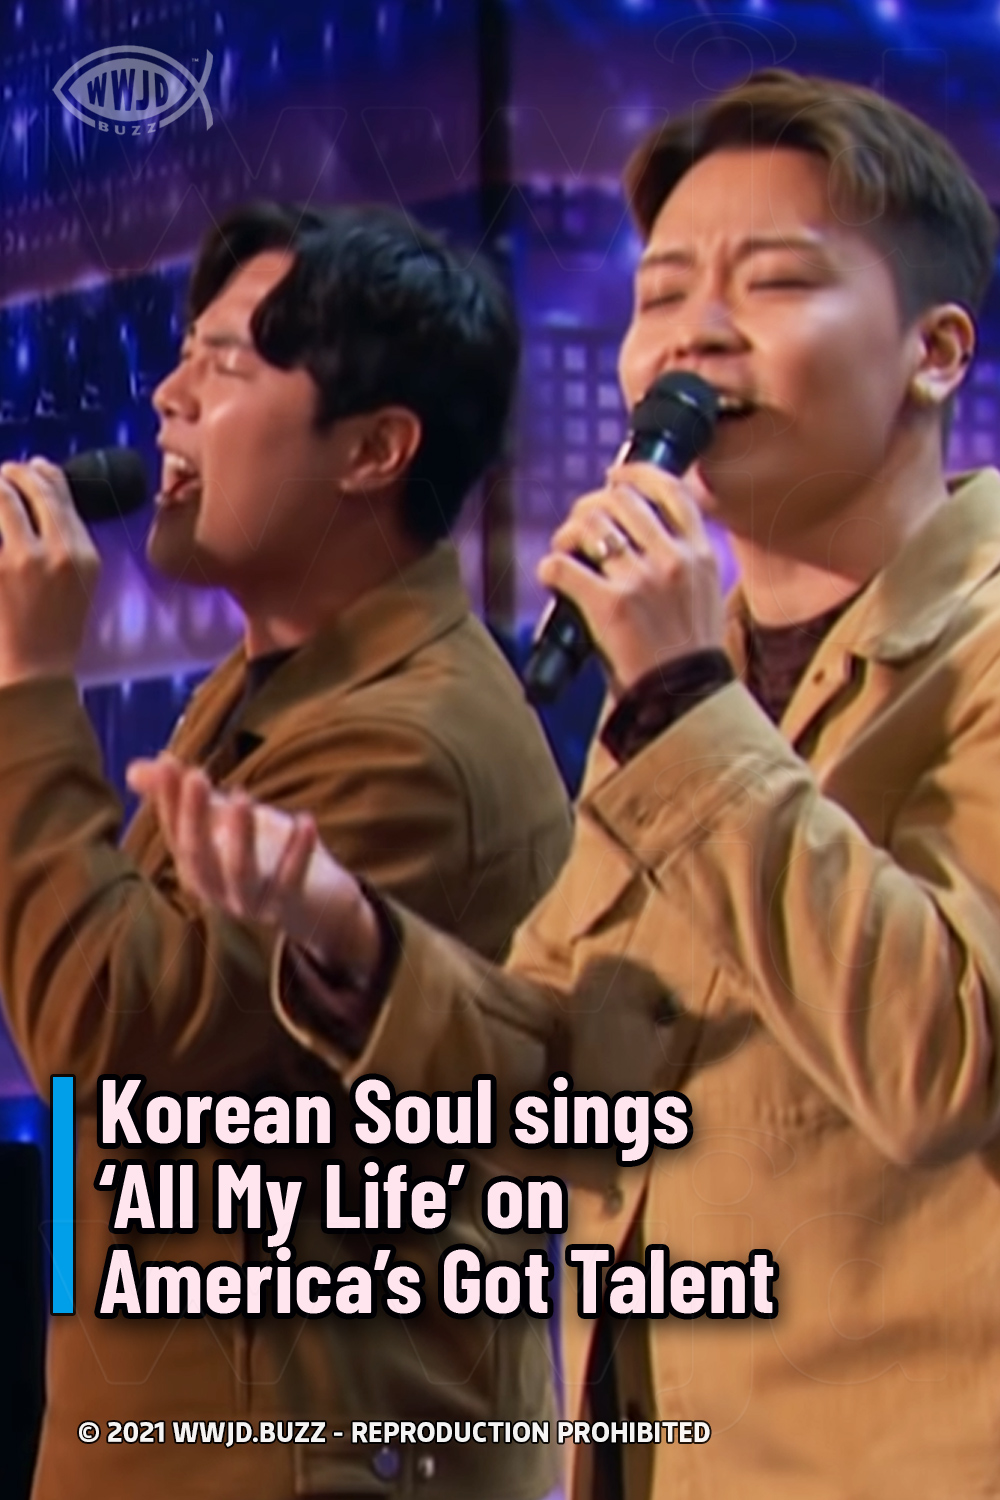 Korean Soul sings “All My Life” on America’s Got Talent